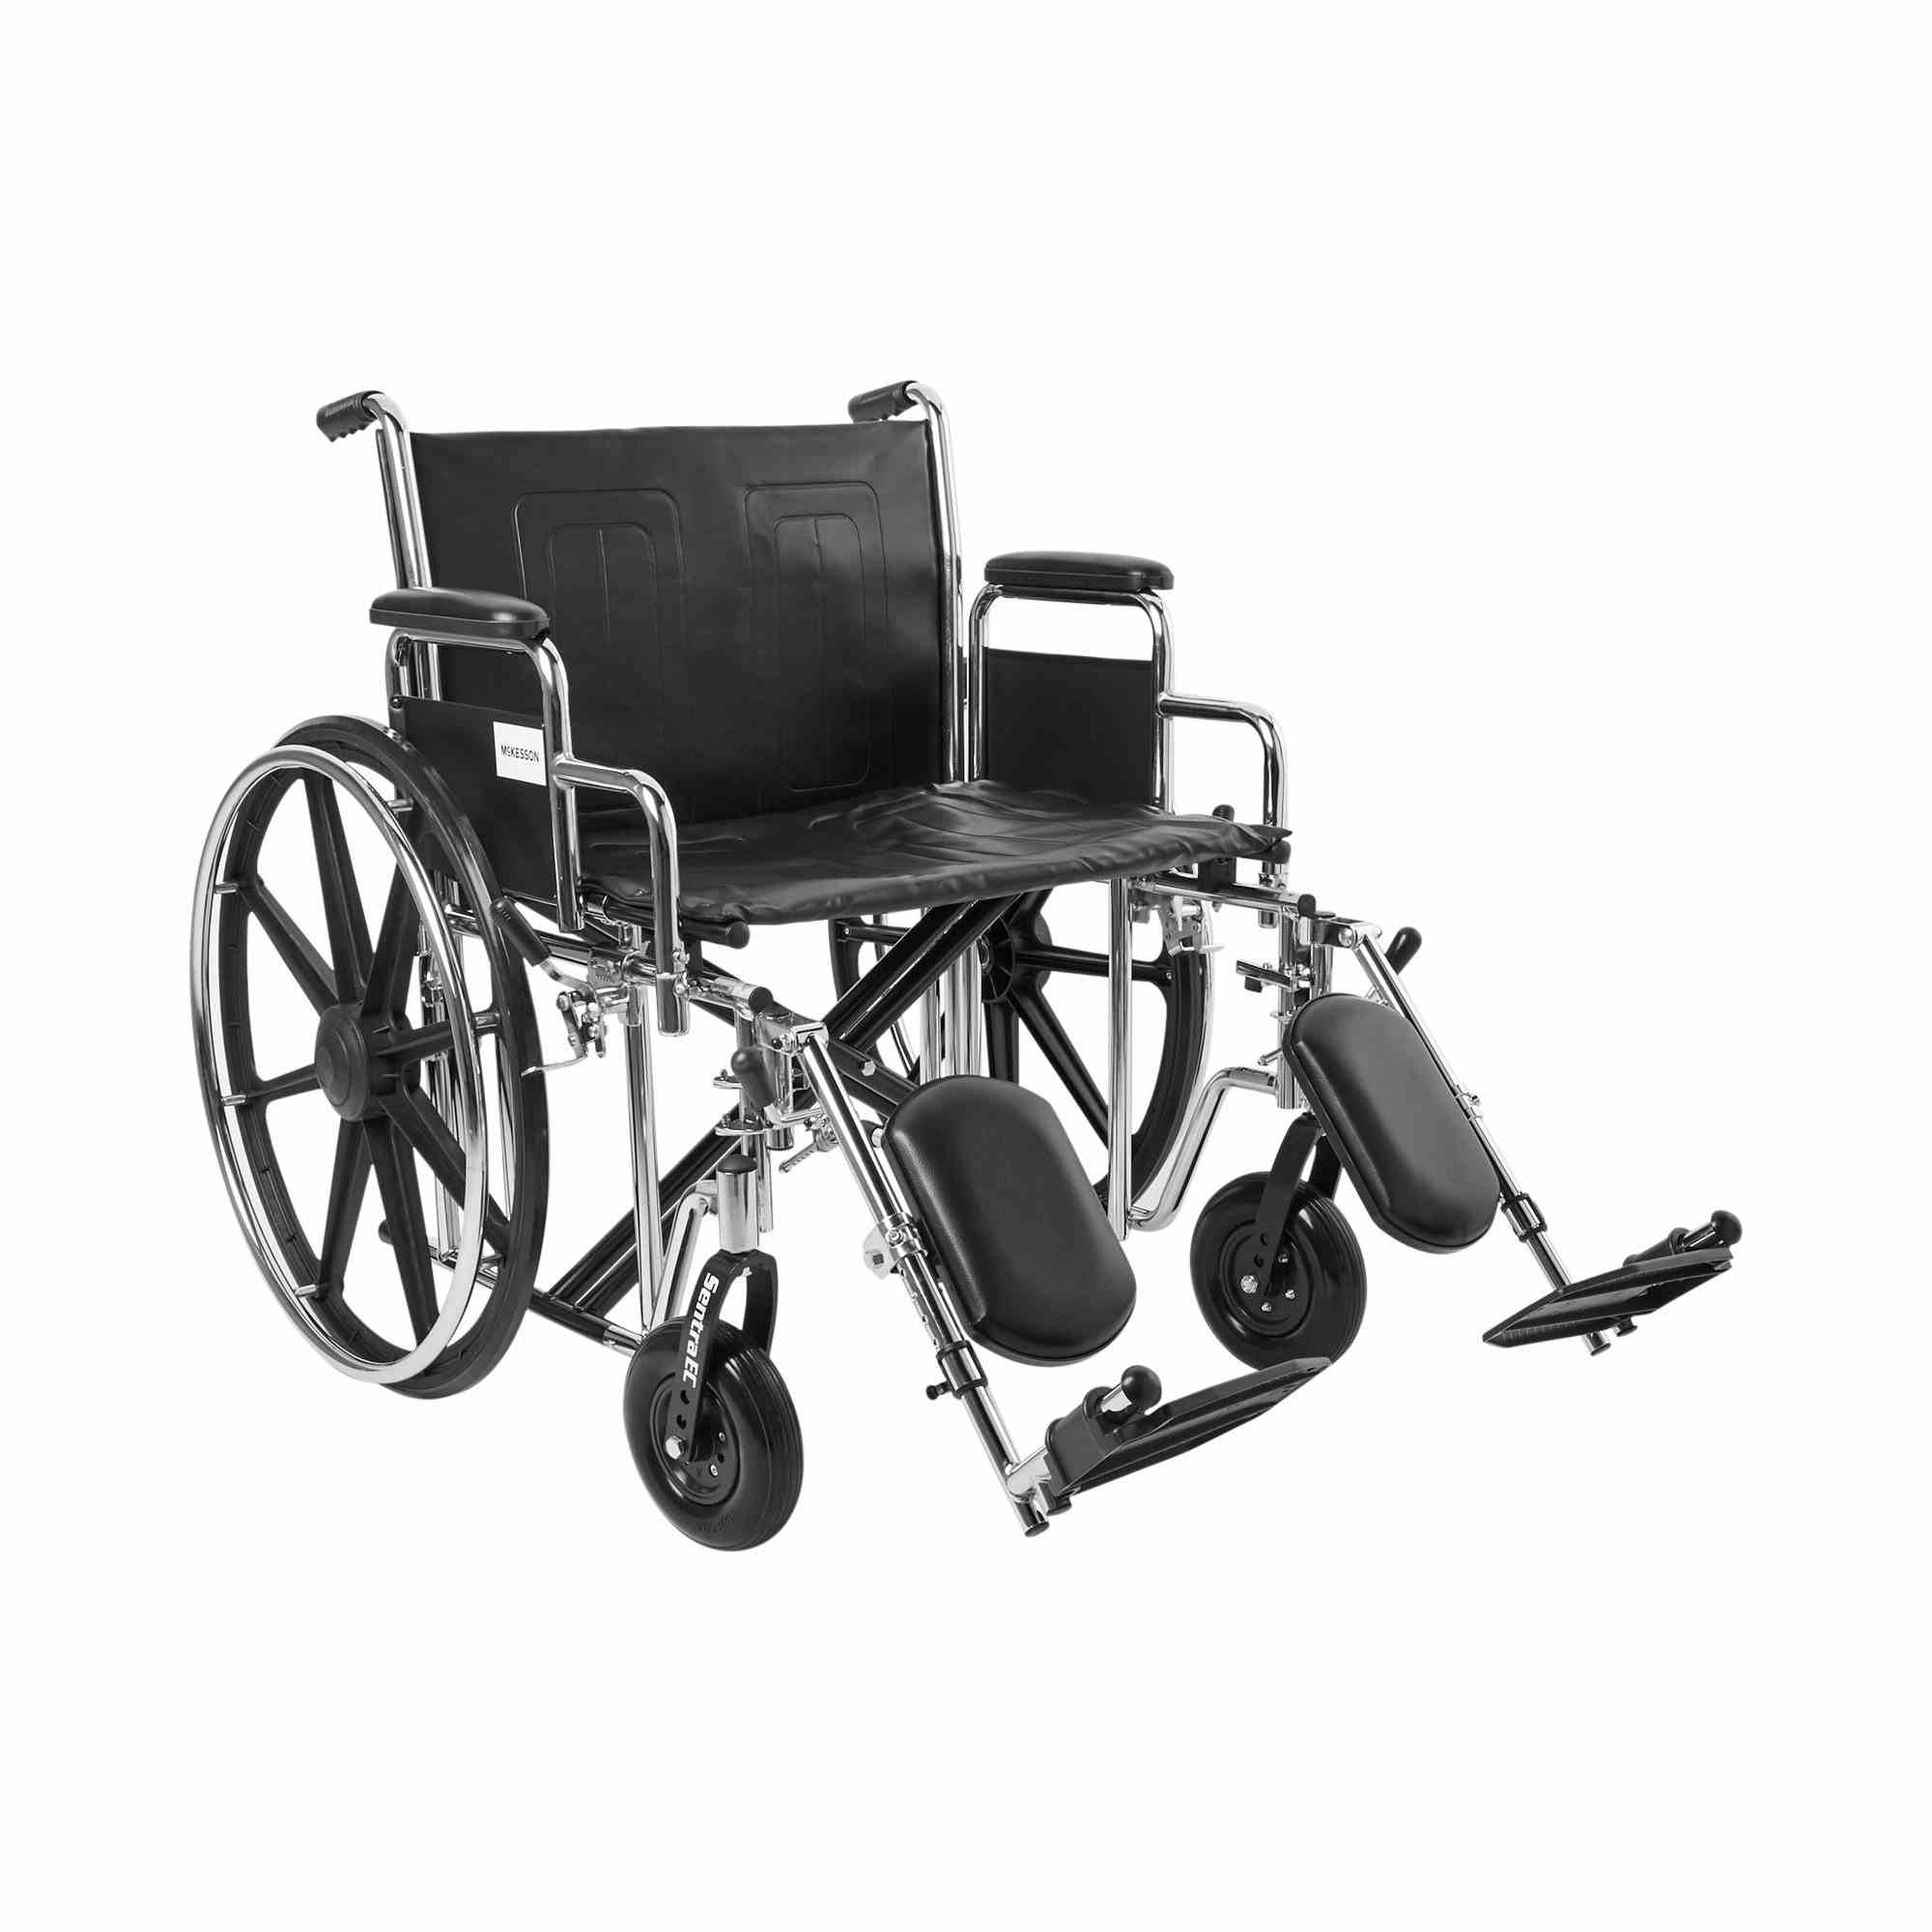 McKesson Bariatric Wheelchair with Swing-Away Elevating Legrest, 146-STD24ECDDA-ELR, 24" Seat - 1 Each